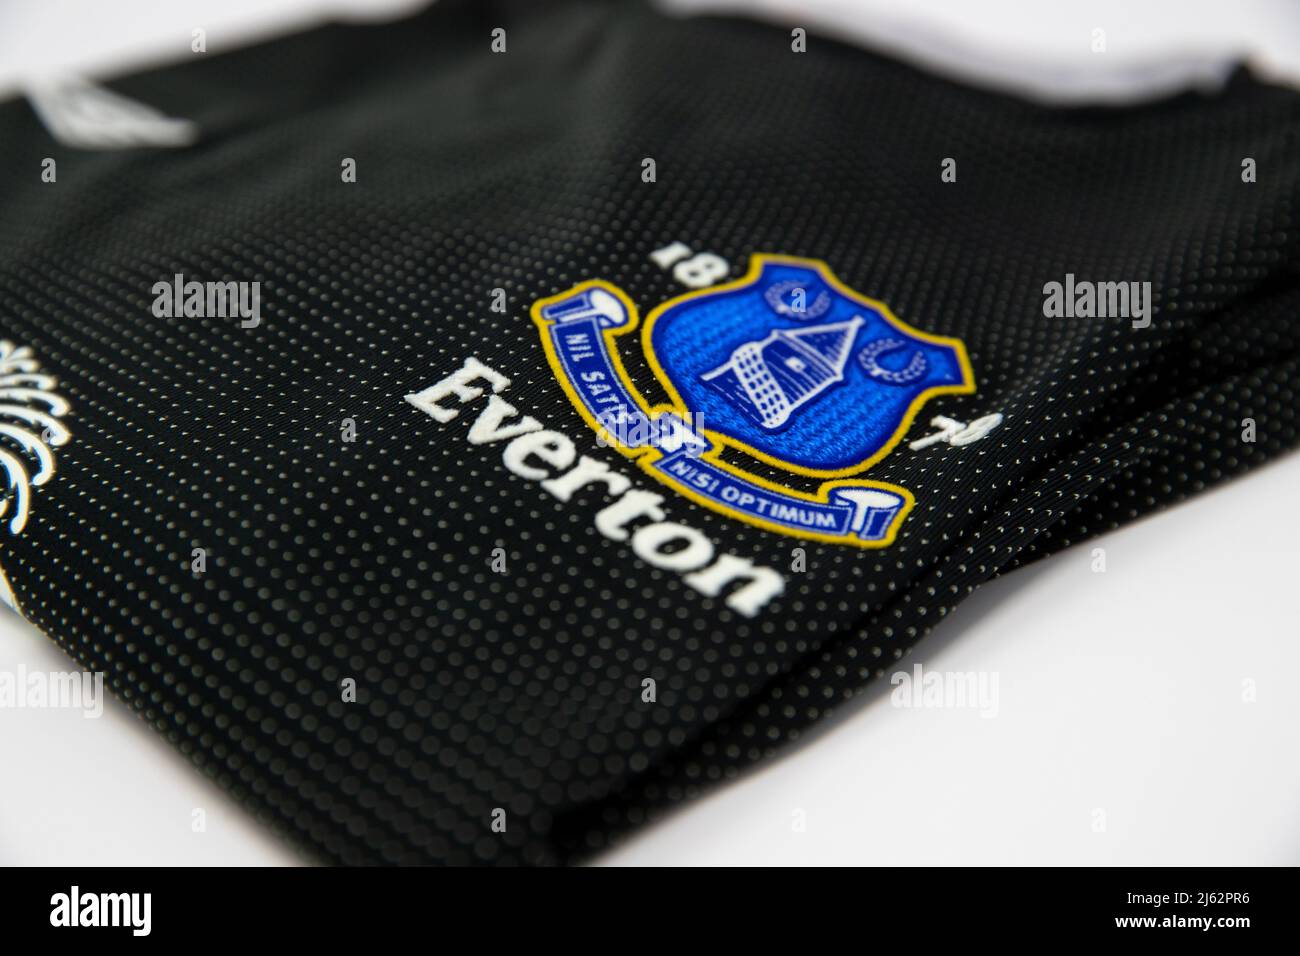 Everton Badge on a black Umbro football shirt Stock Photo